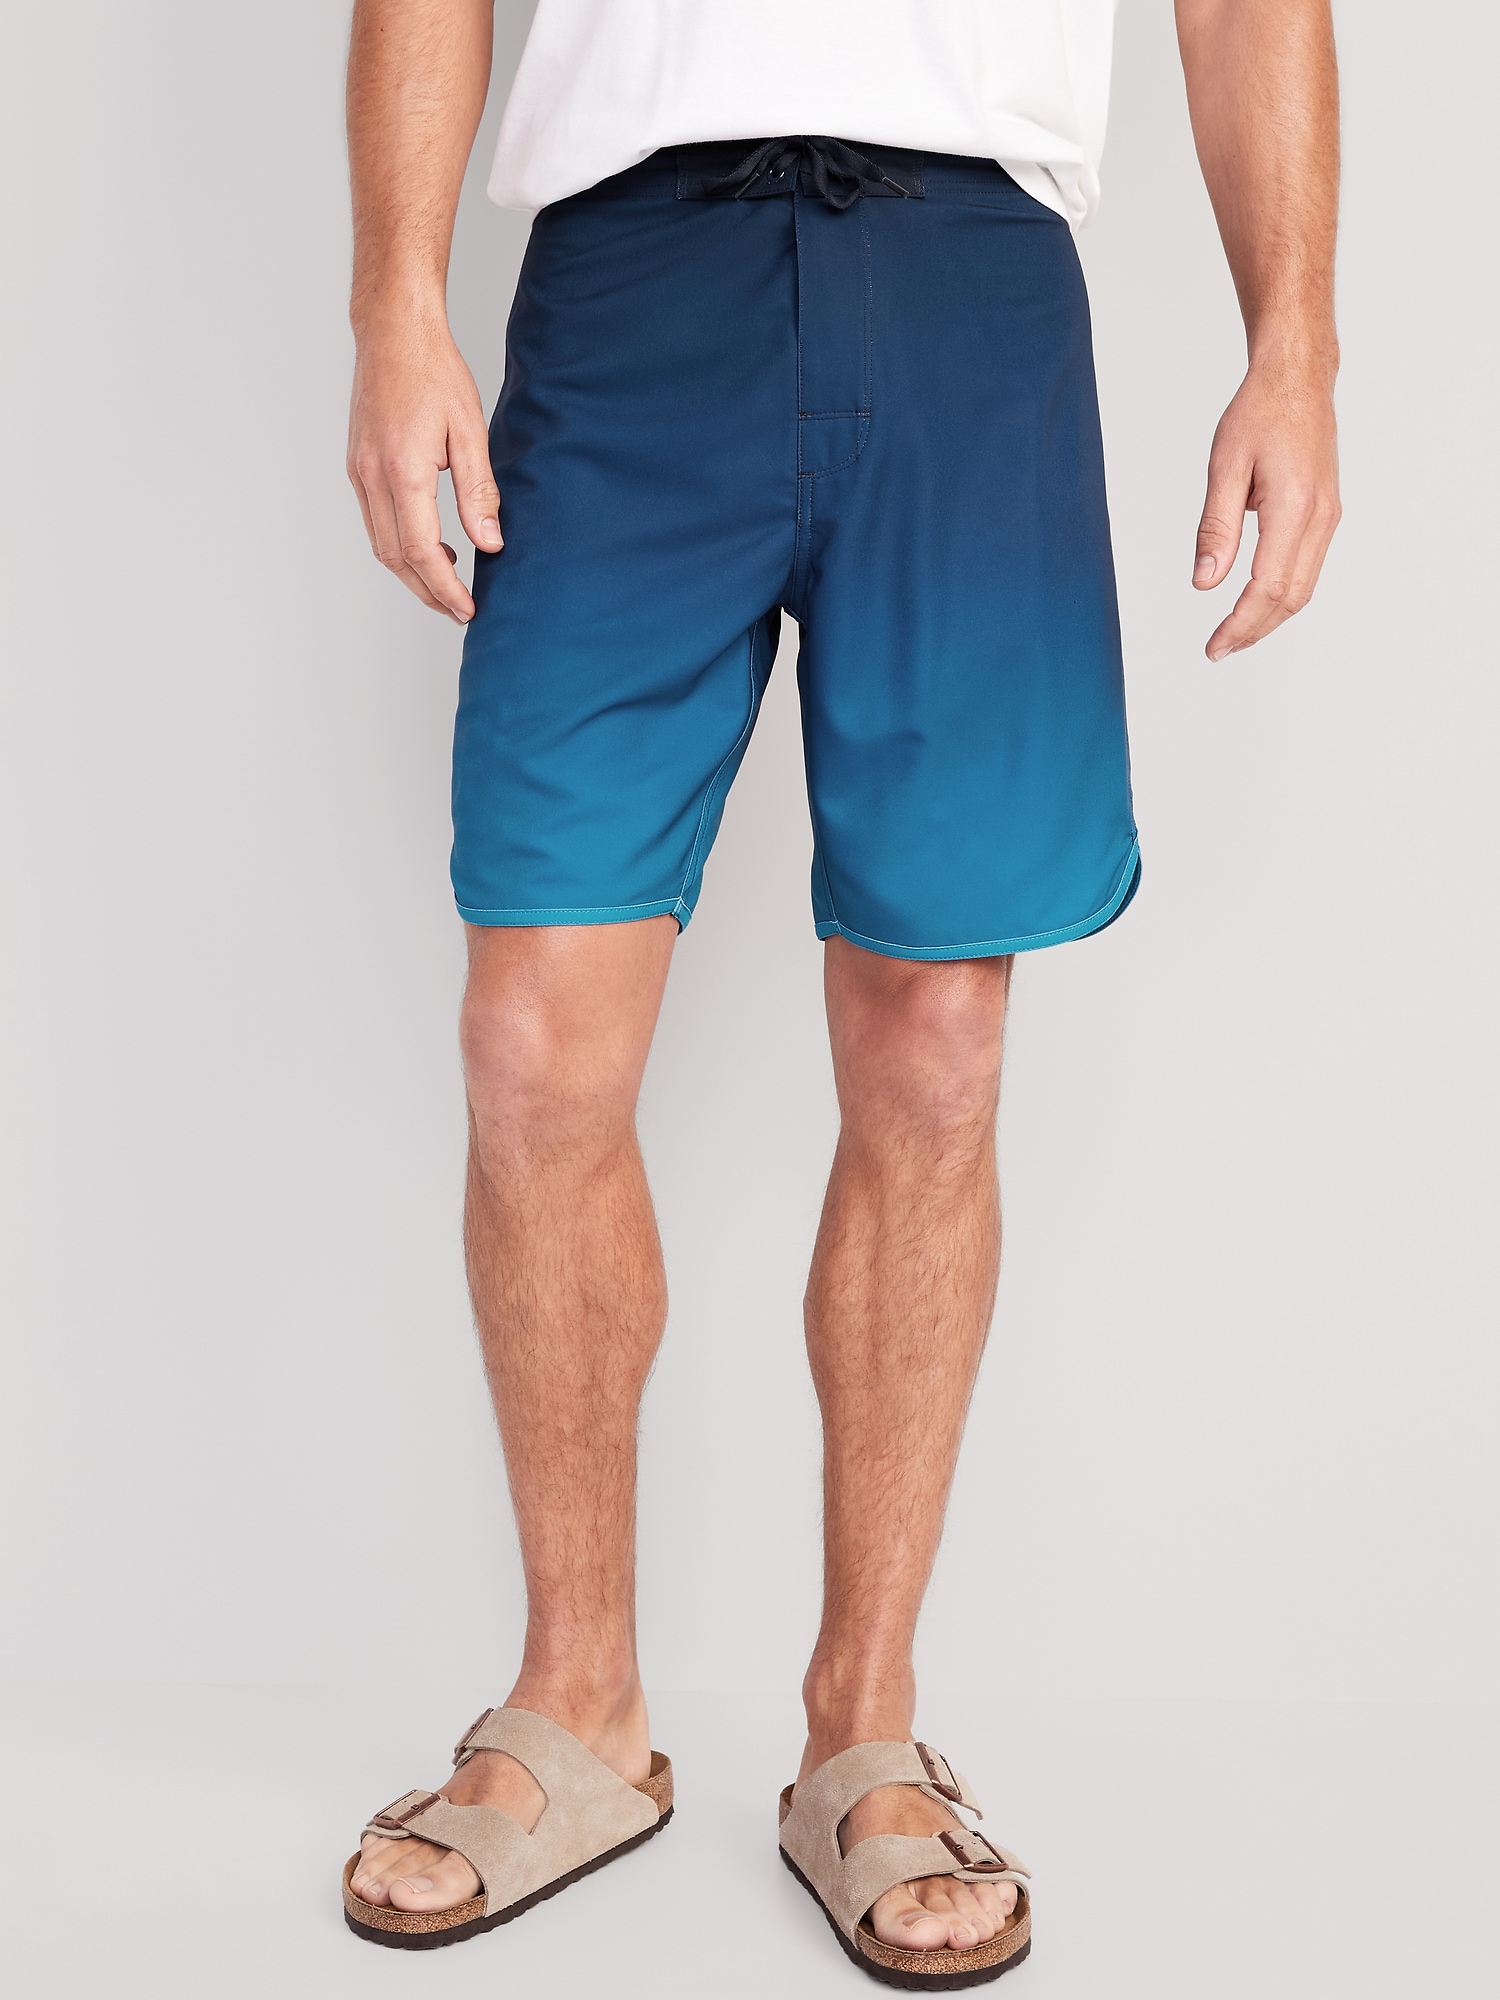 Old Navy Built-In Flex Board Shorts for Men -- 8-inch inseam blue. 1